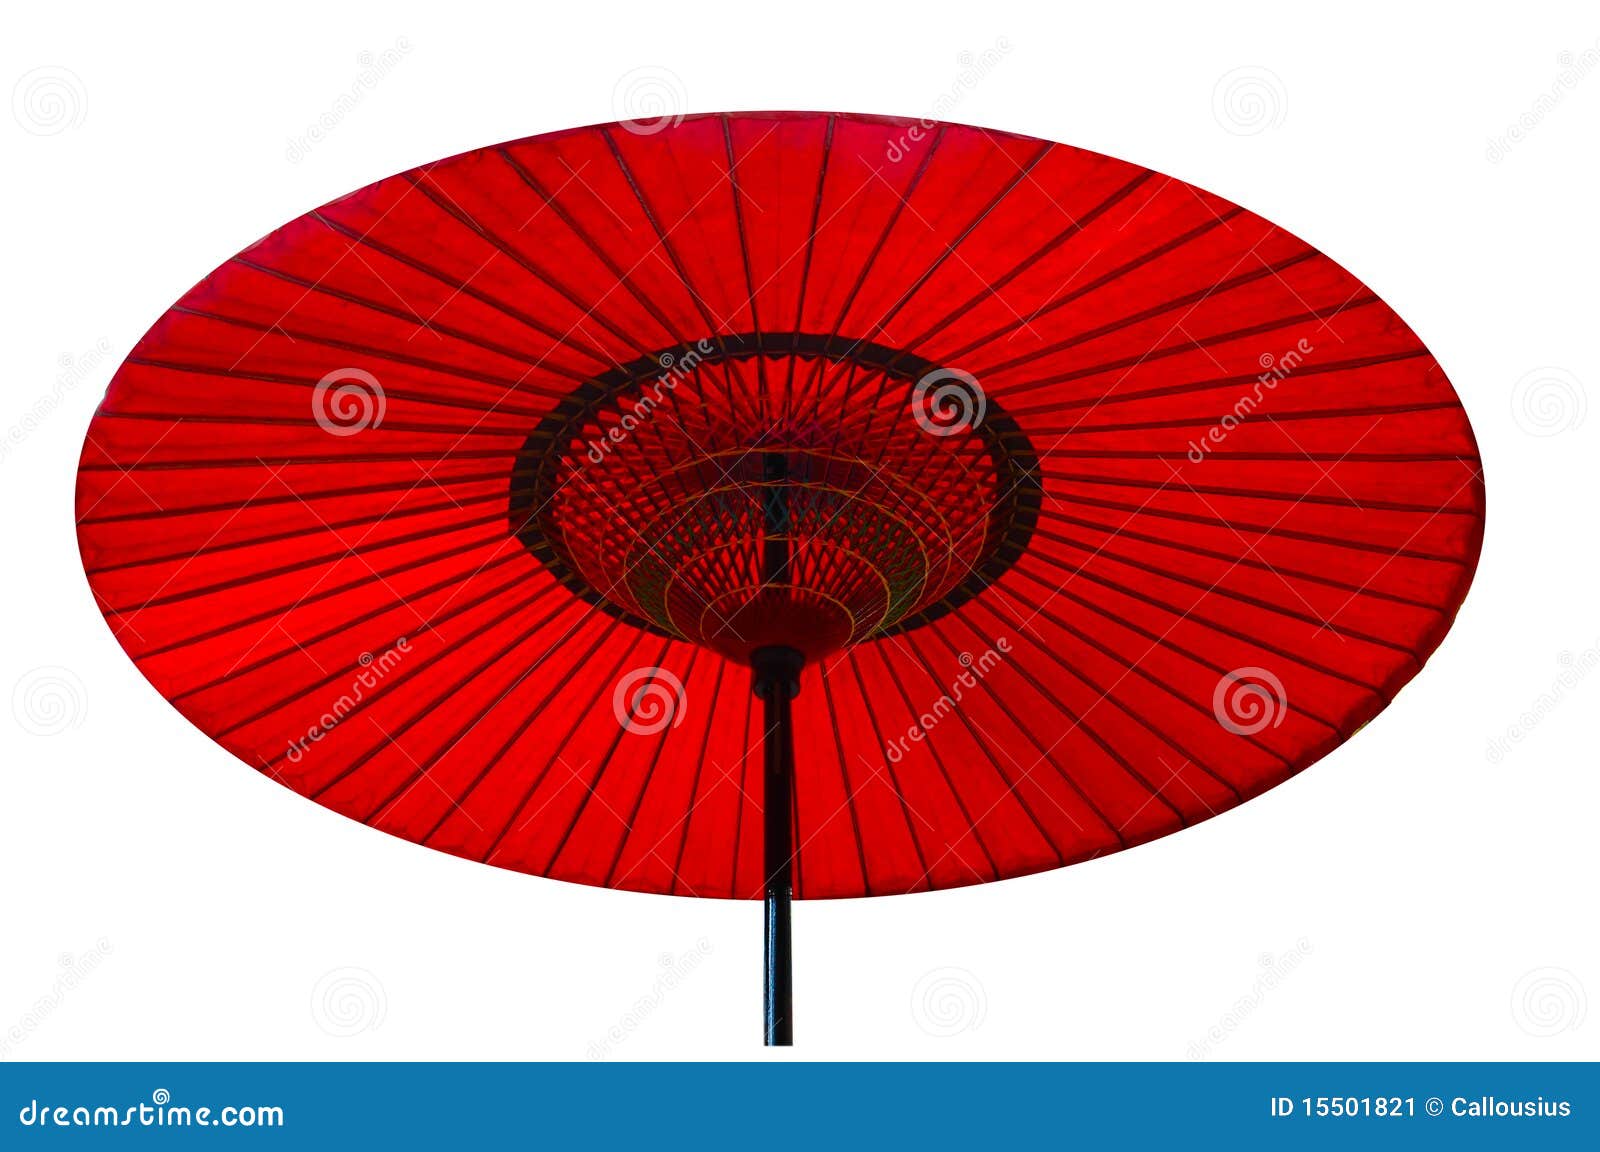 Higgins Vereniging Overeenkomstig met Red Oriental Parasol stock image. Image of hand, objects - 15501821